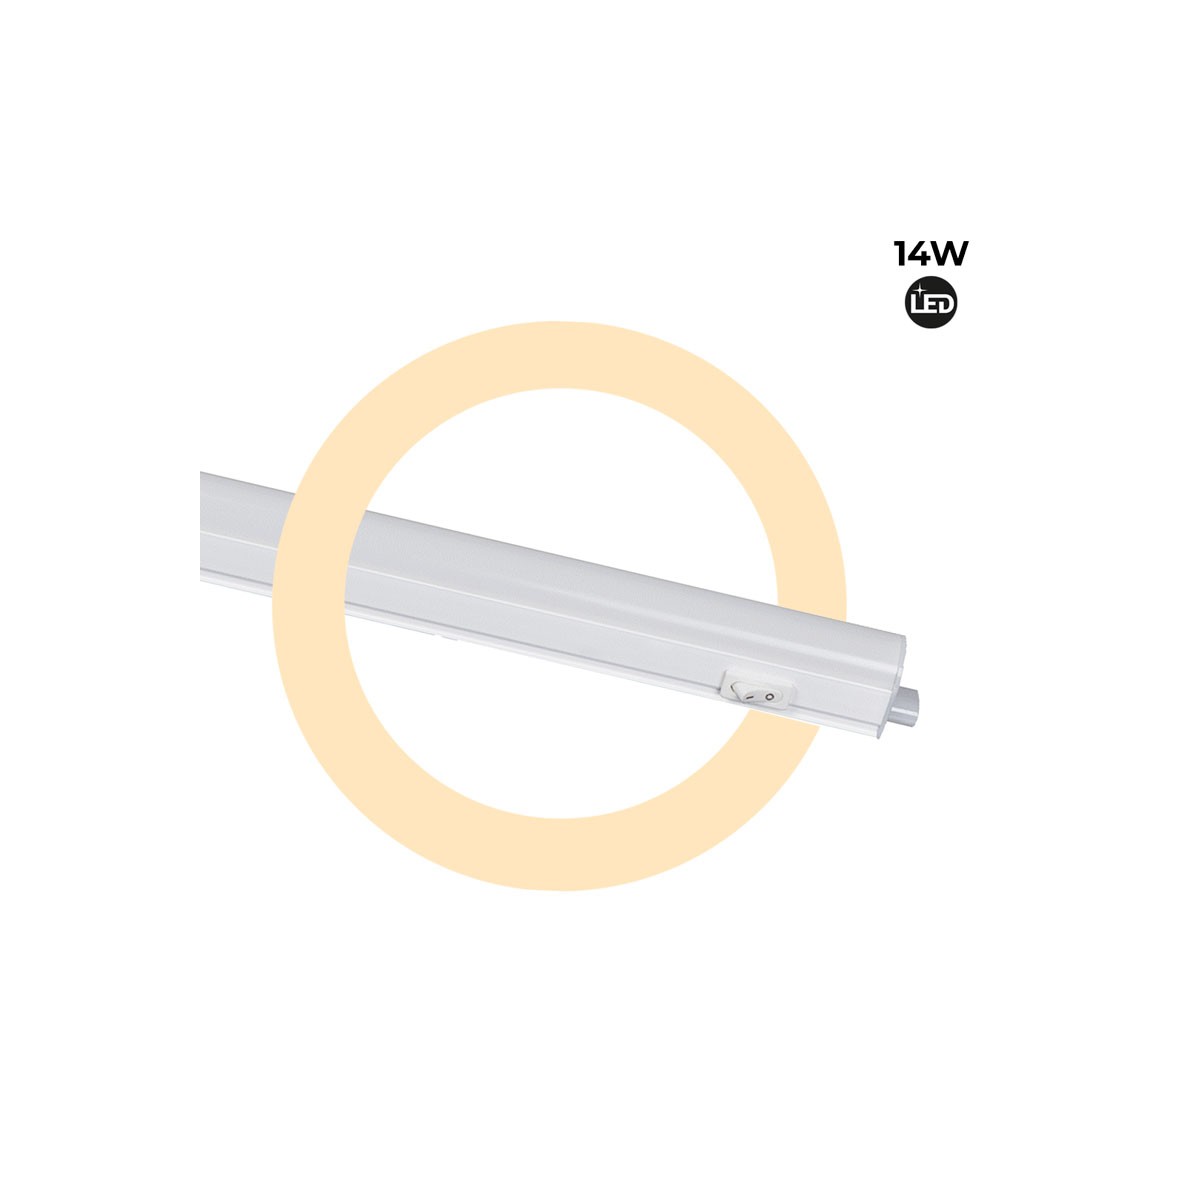 LED underfurniture strip T5 120cm 14W opal